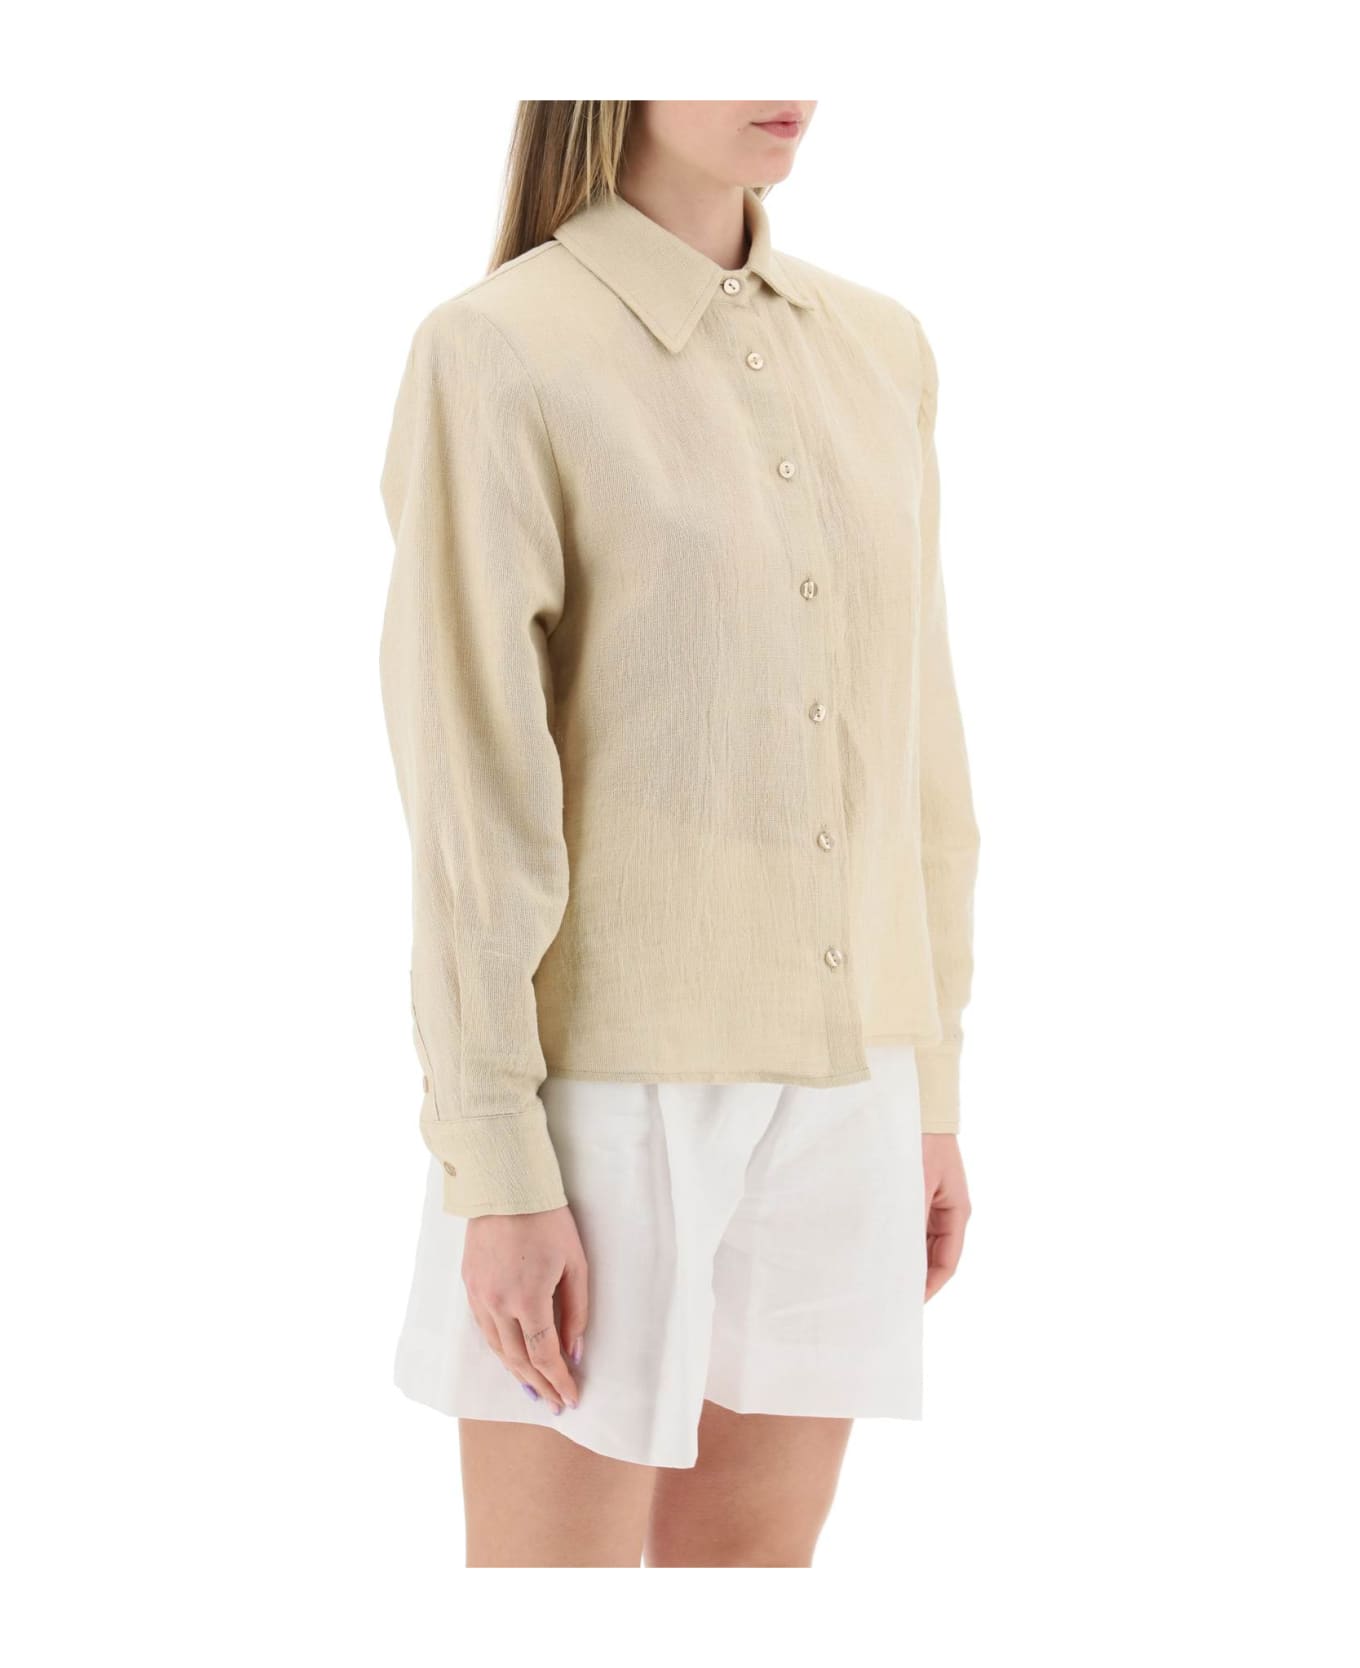 MVP Wardrobe 'malibu' Cotton Linen Shirt - NUDE (Beige)